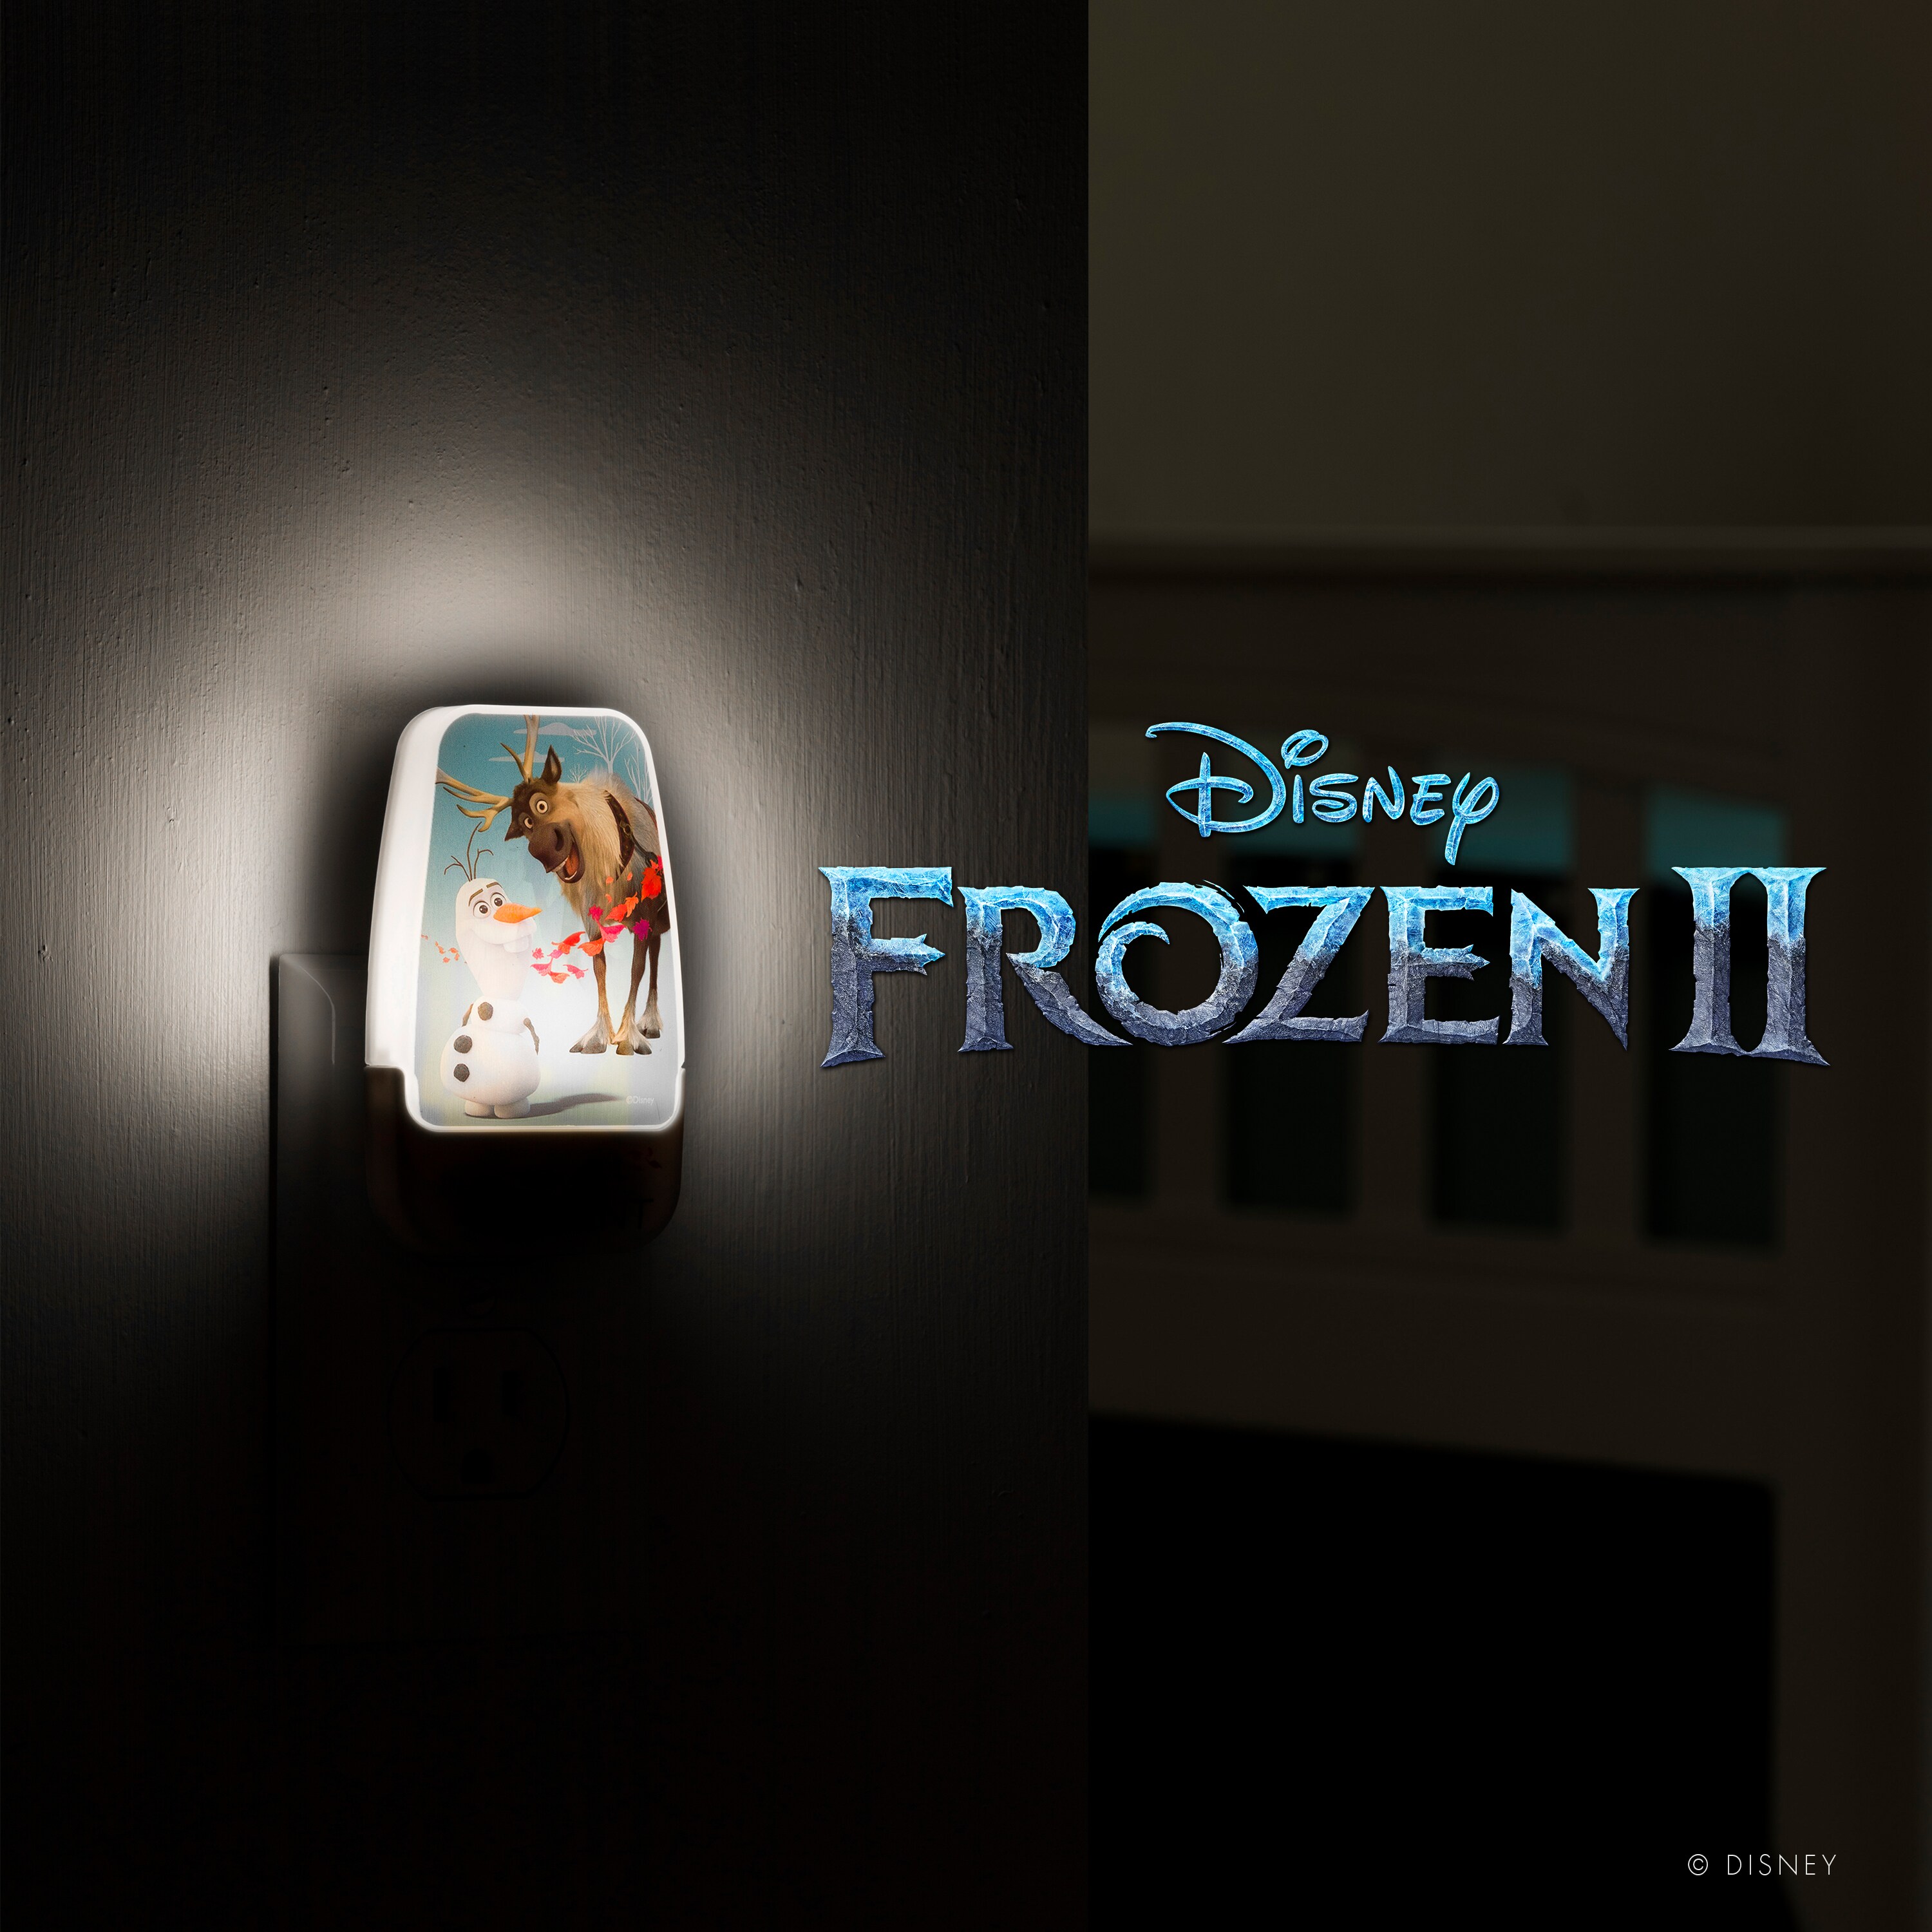 Disney Frozen White Auto On/Off Night Light Lowes.com